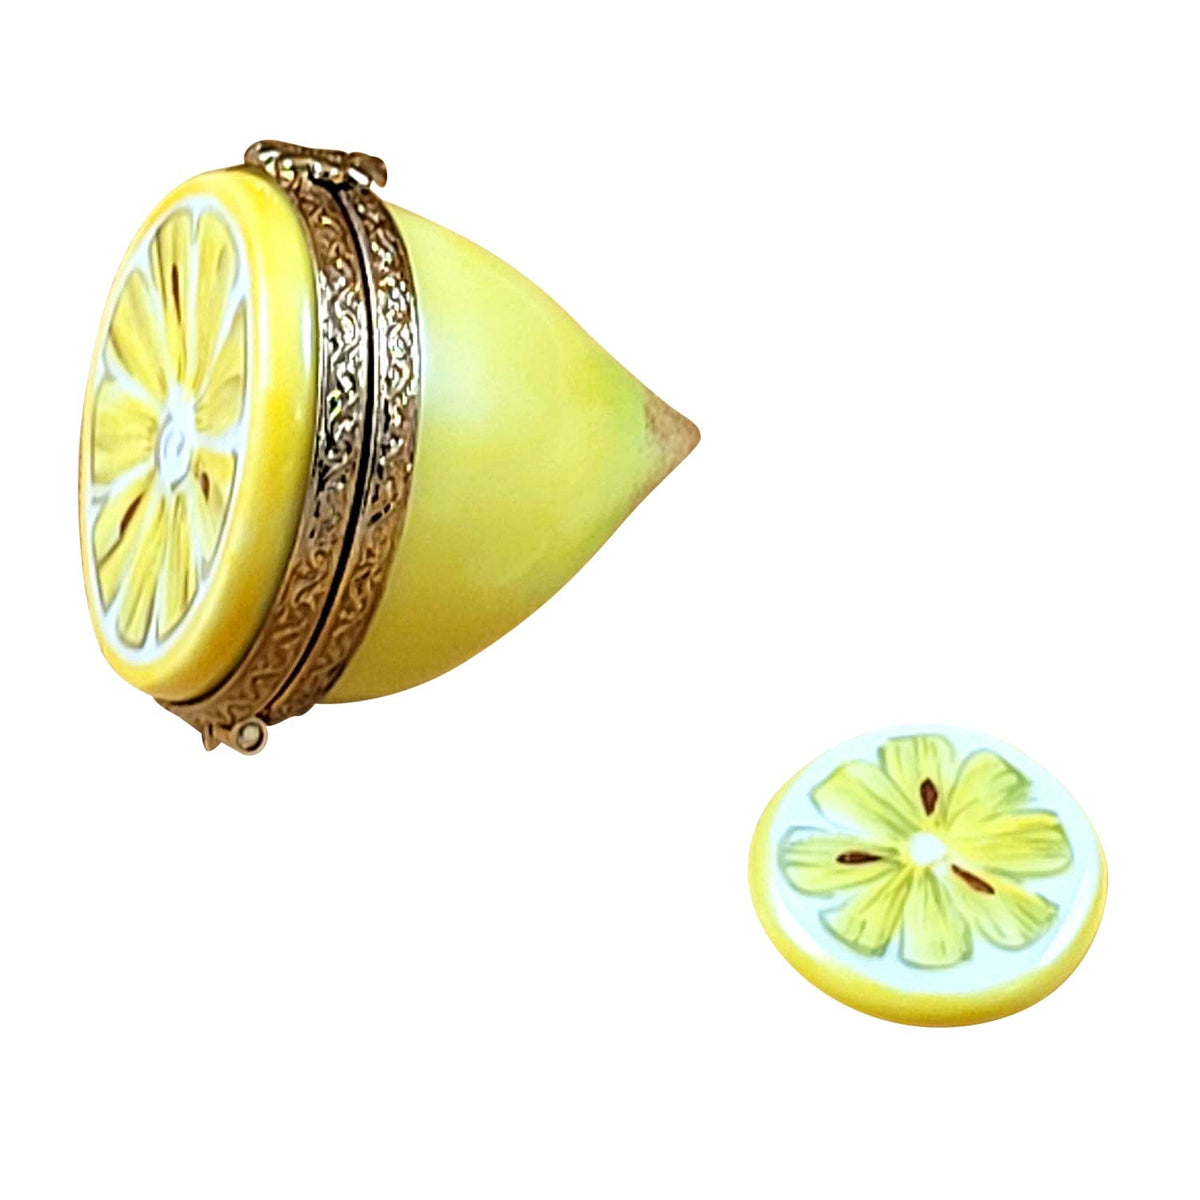 Half lemon with removable slice